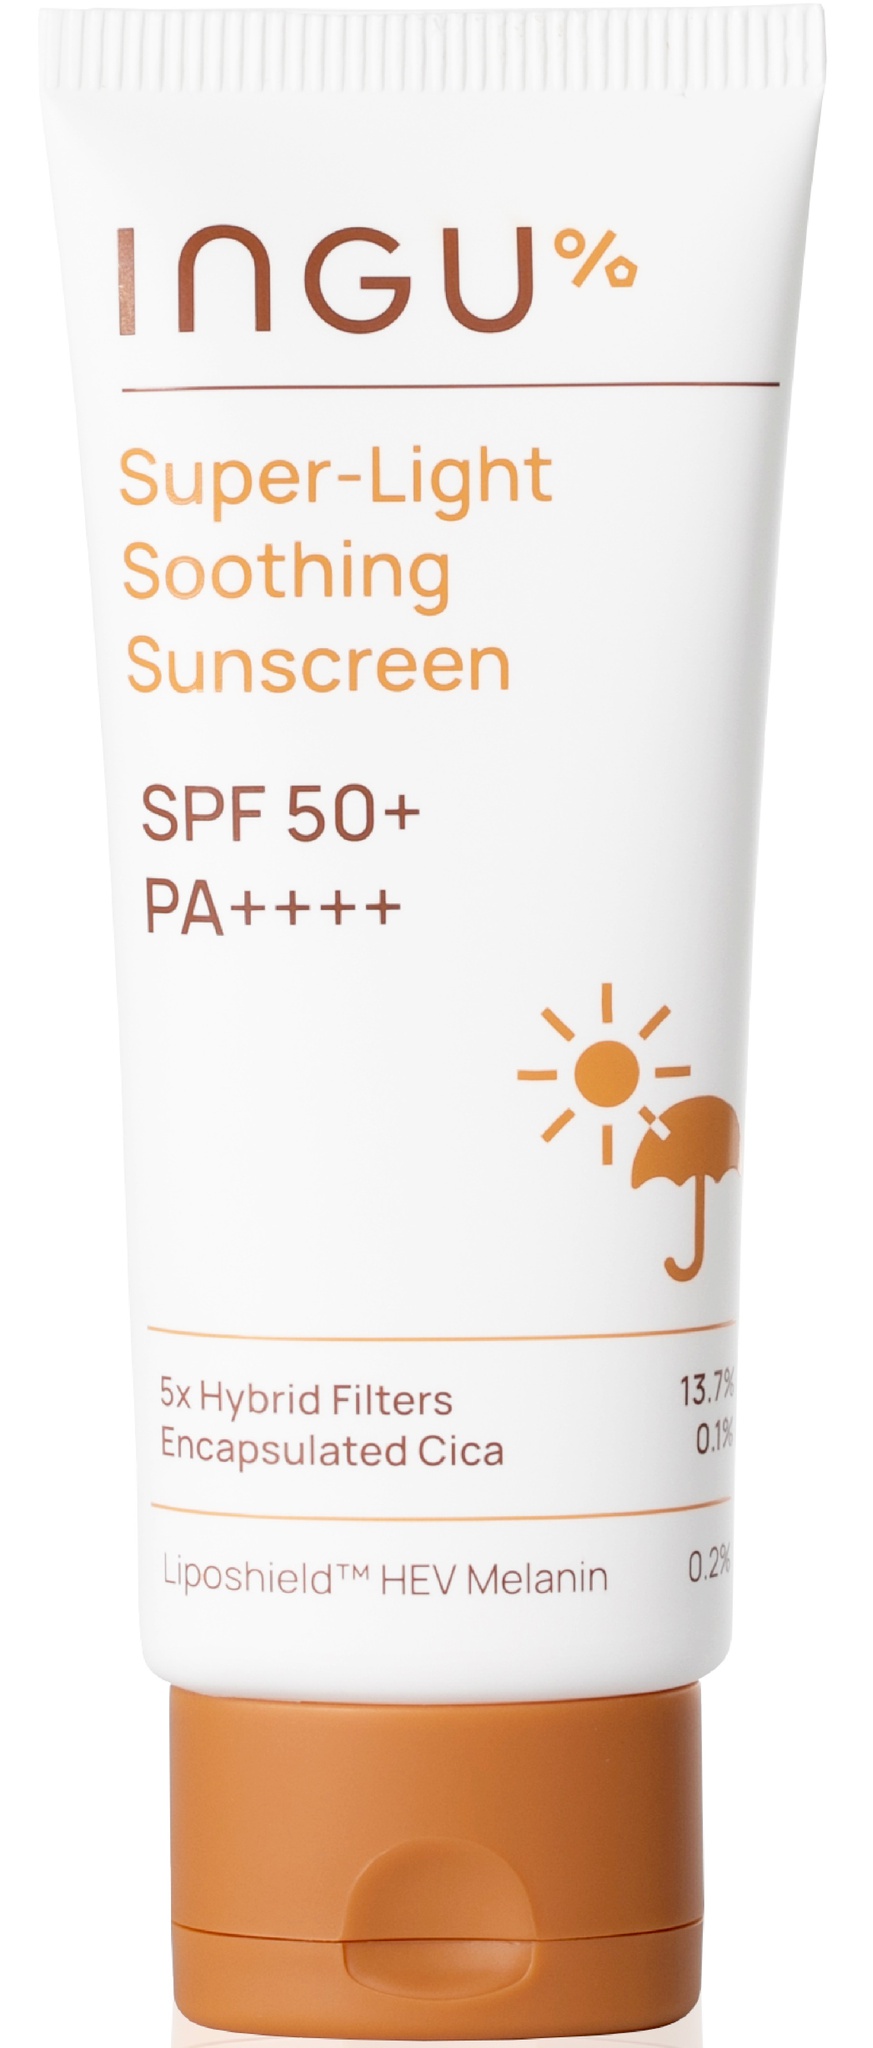 INGU Super-light Soothing Sunscreen SPF50+ Pa++++